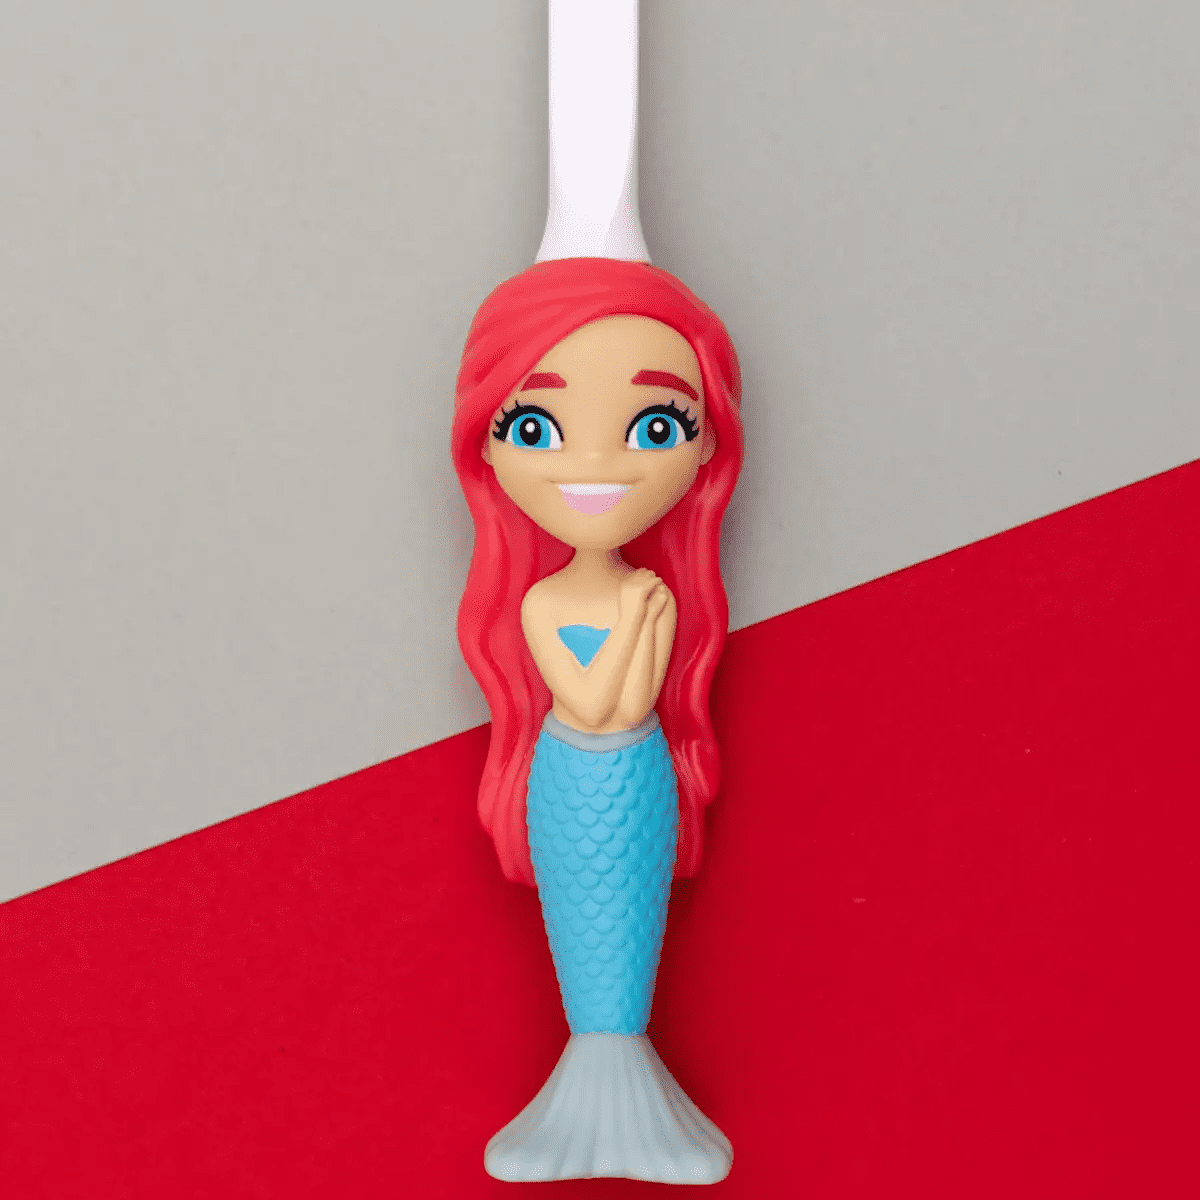 Aqua the Mermaid toothbrush featuring red-haired mermaid design